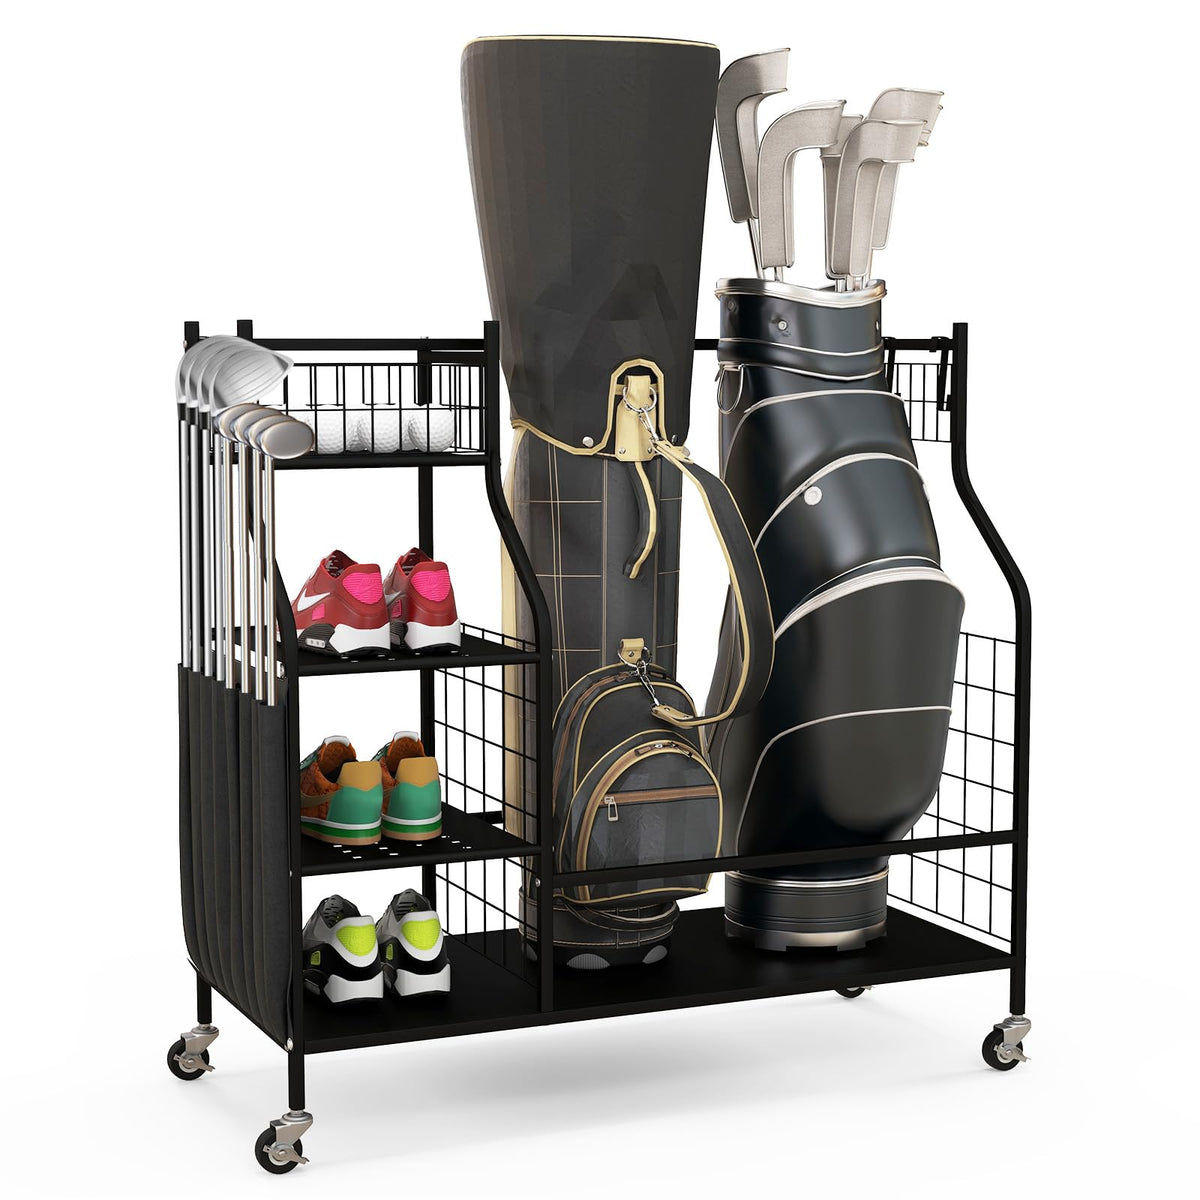 Goplus Golf Bags Storage Garage Organizer, Golf Bag Rack with Lockable Universal Wheels for Golf Clubs